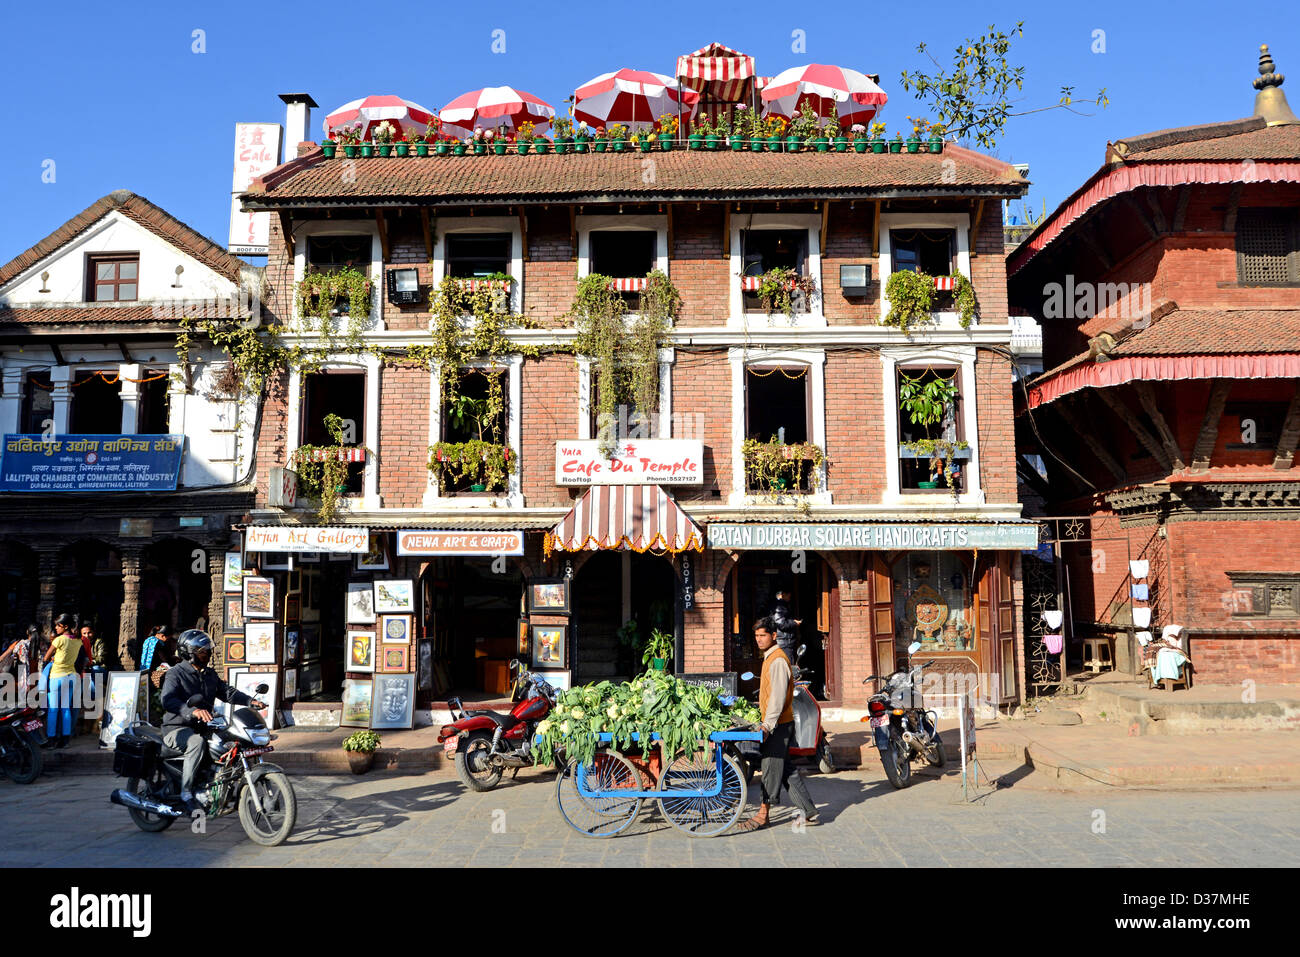 Cafe du temple restaurant, Durbar square, Patan, Nepal Stock Photo